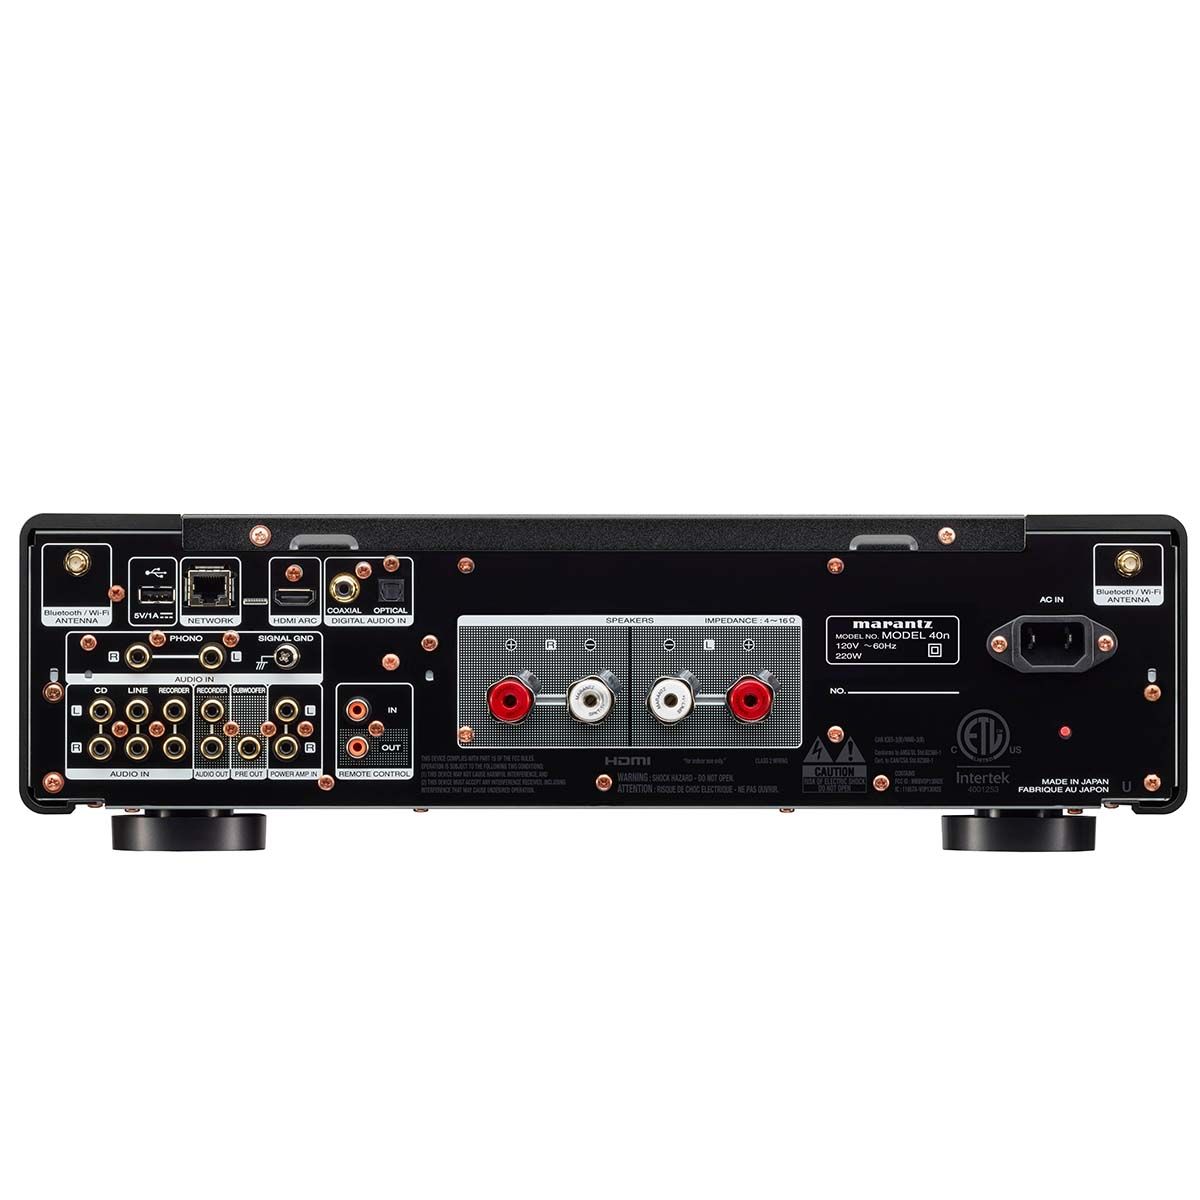 Marantz Model 40n Integrated Amplifier, Black, rear panel view